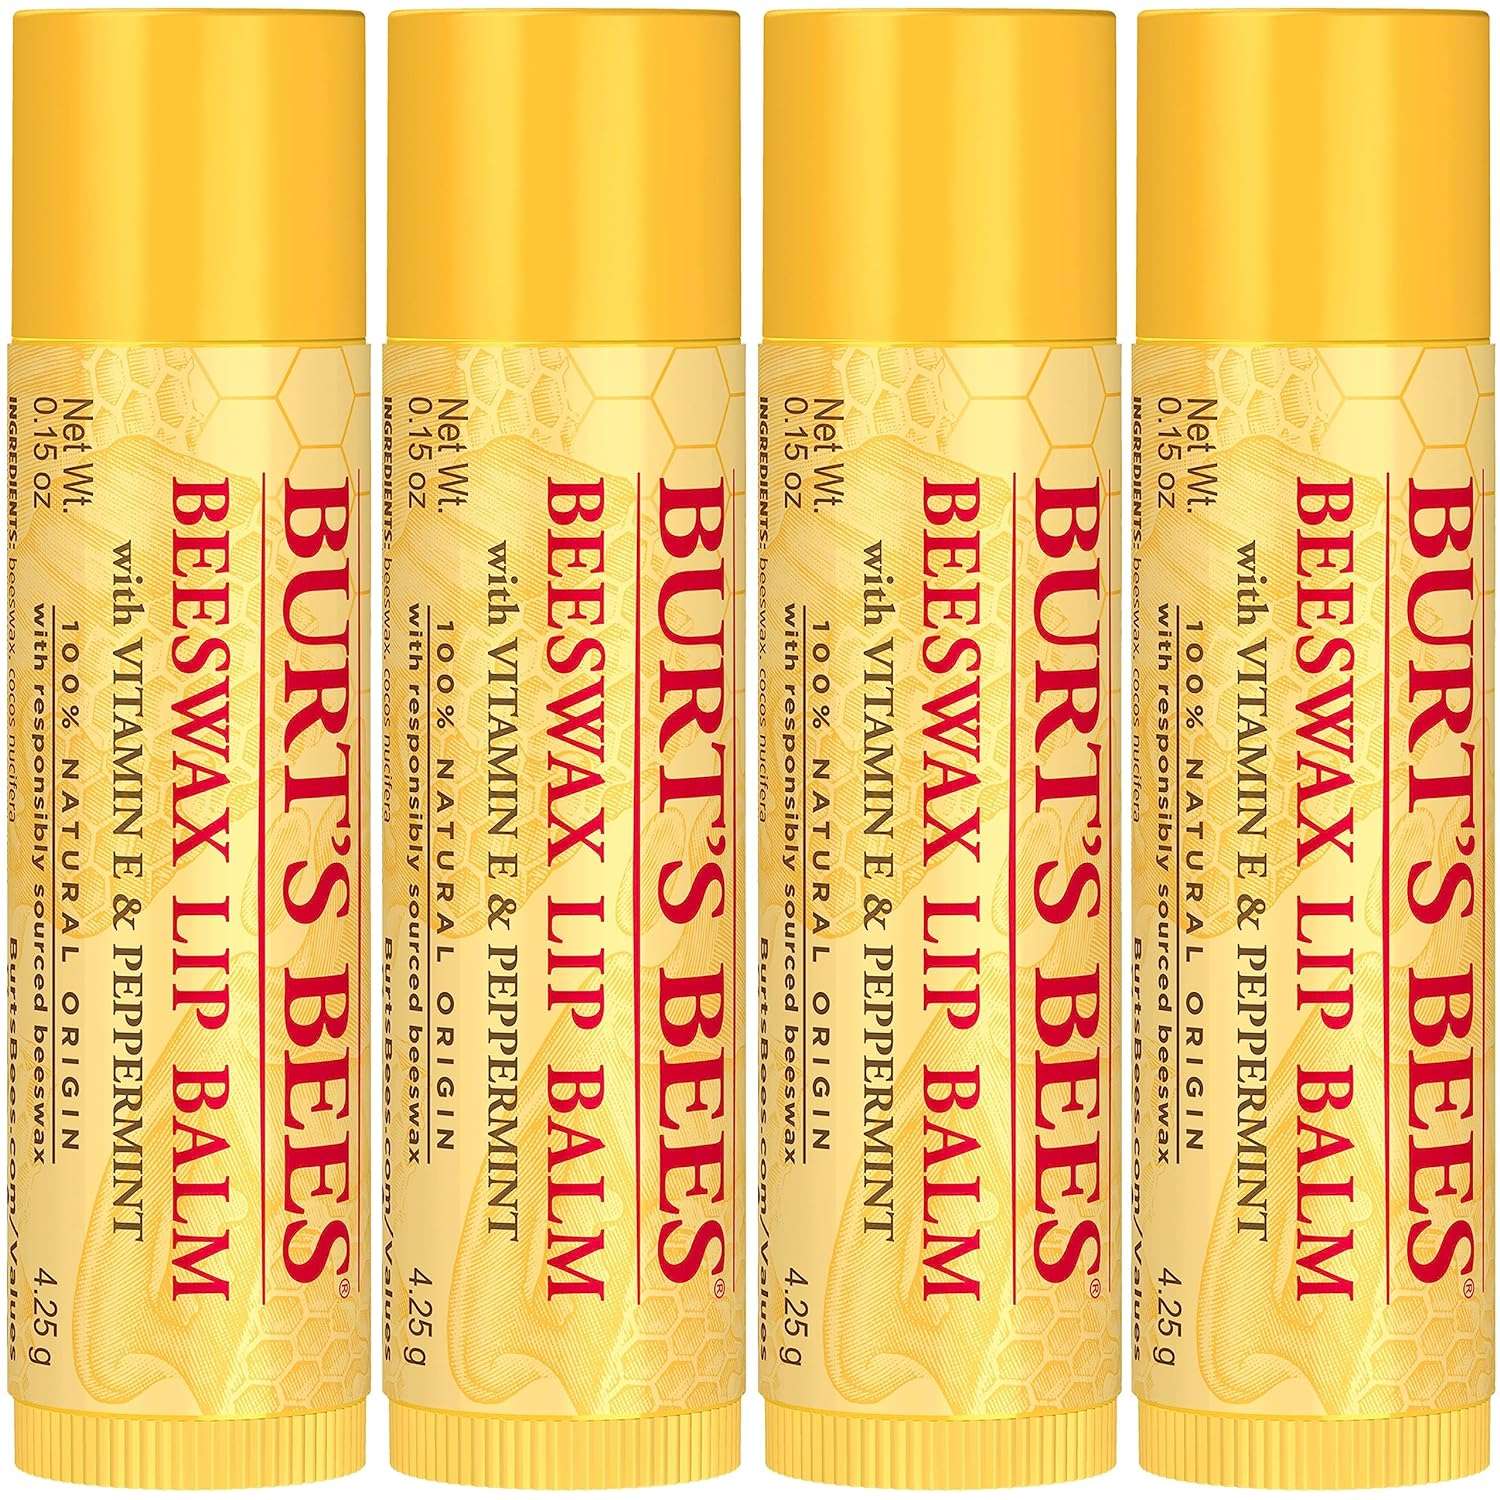 Burt’s Bees Lip Balm Stocking Stuffers Review